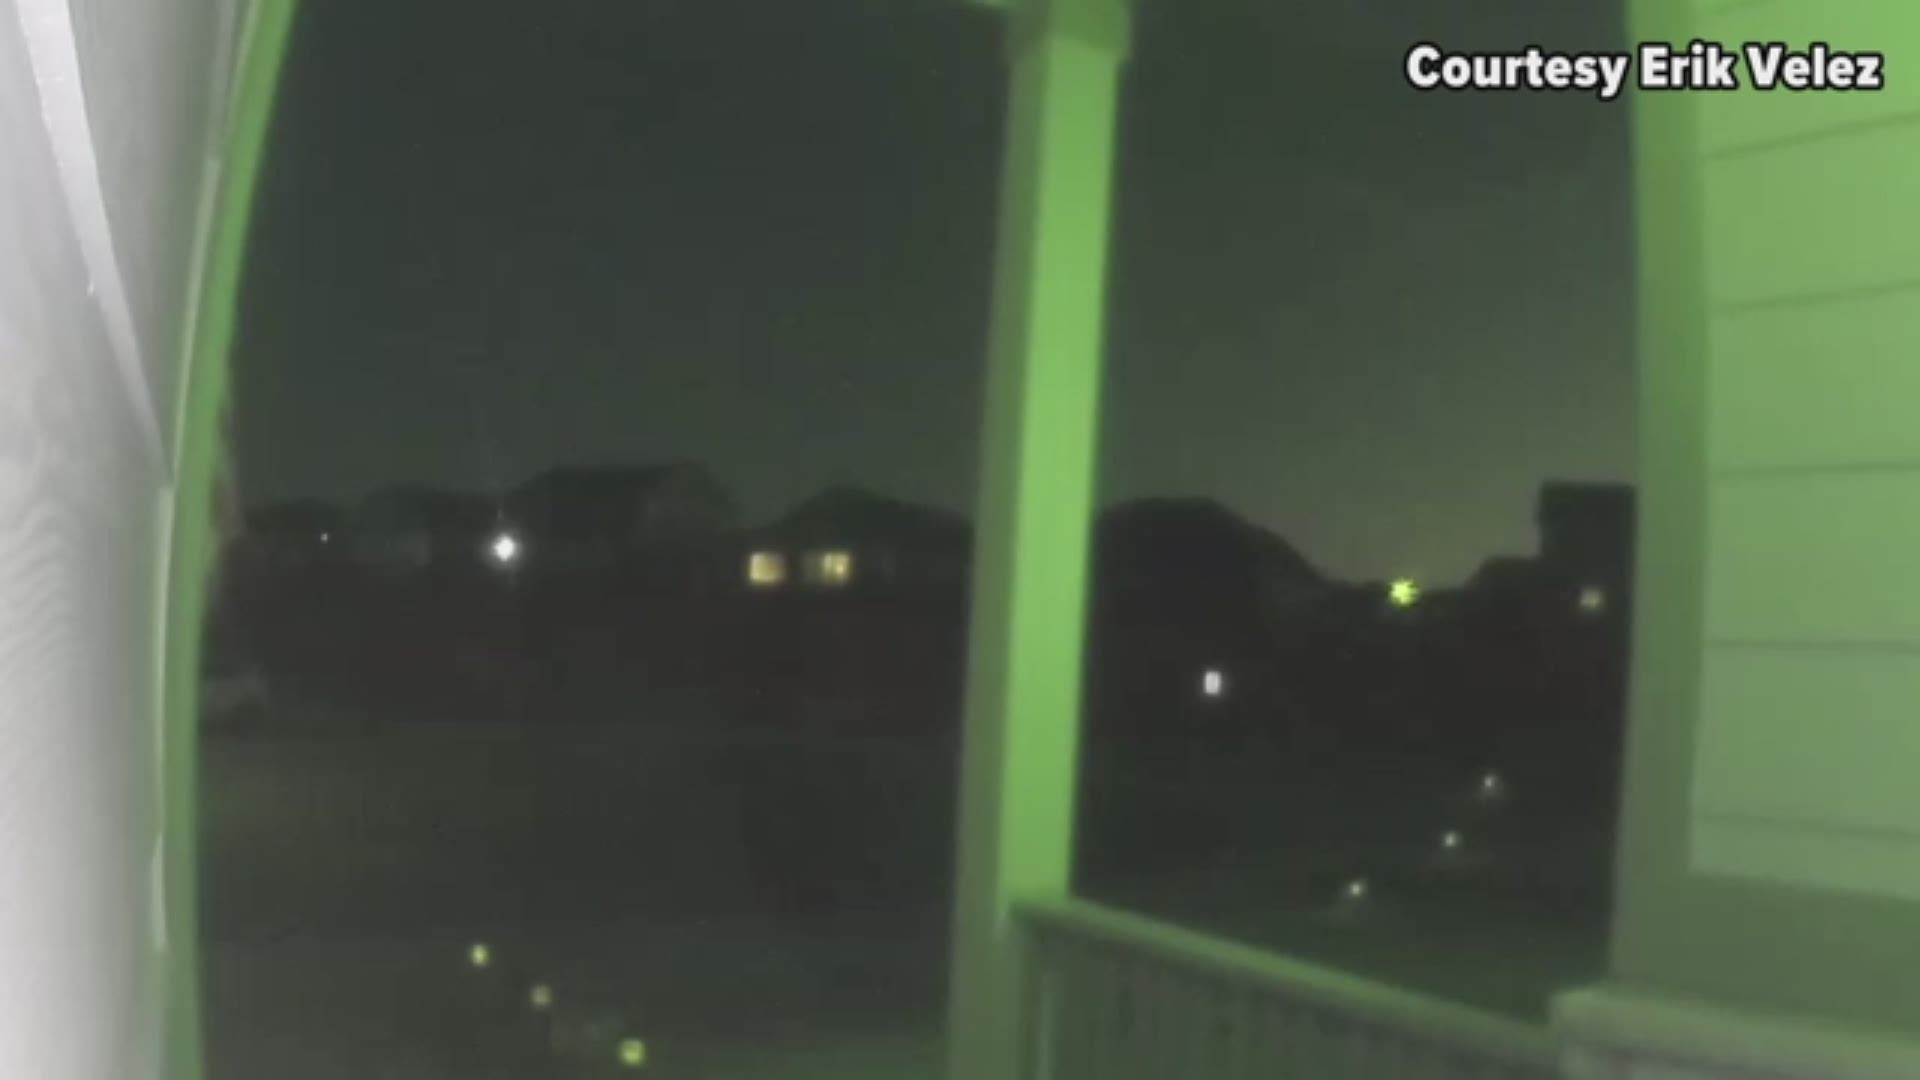 Viewer Erik Velez shared video of a fireball streaking across the sky west of Denver the night of 7/28/20.